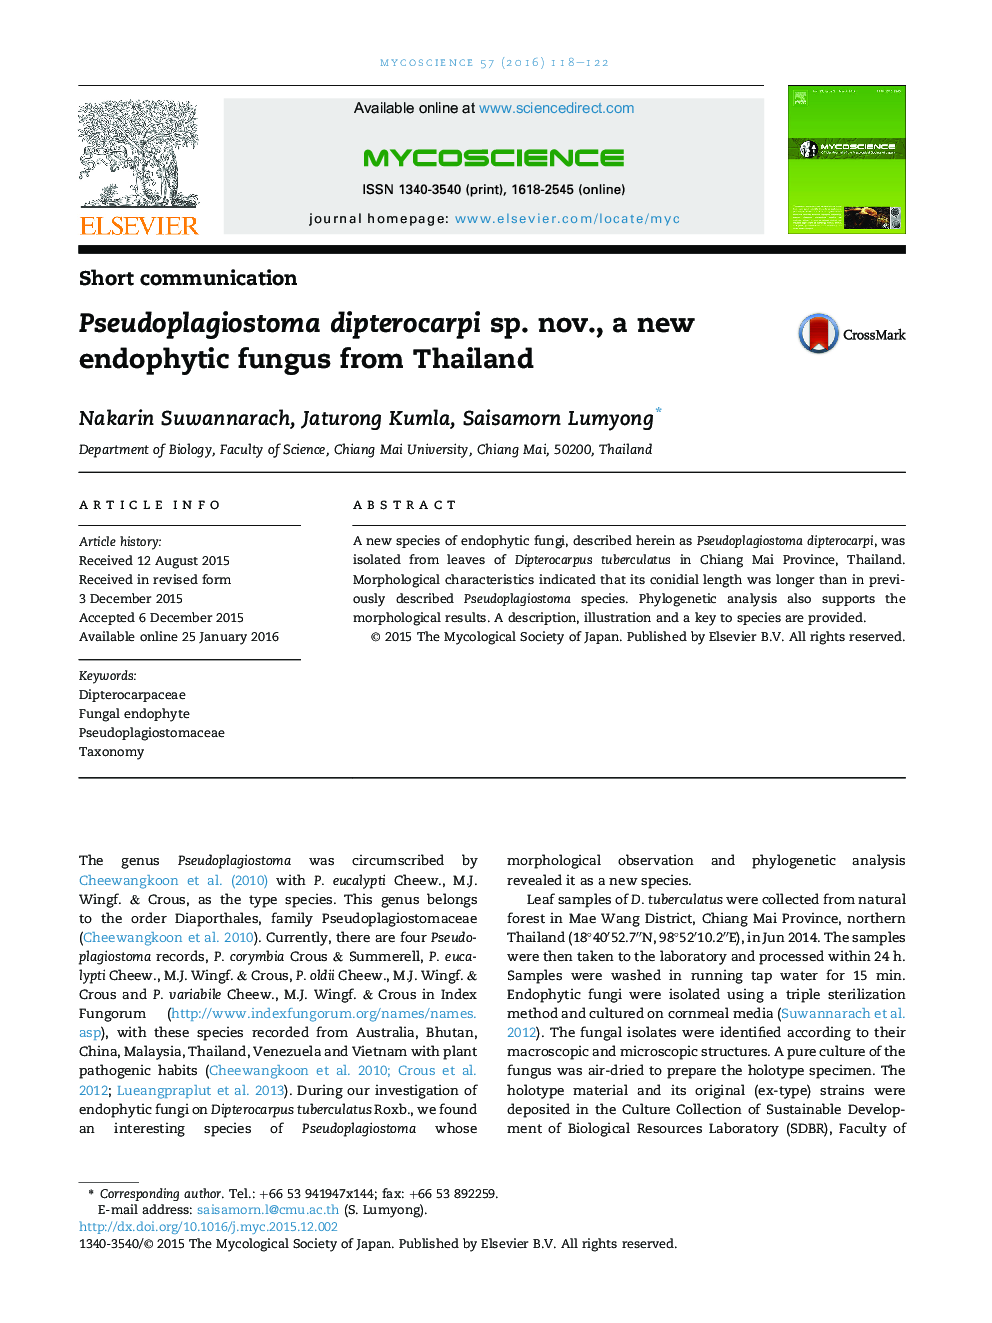 Pseudoplagiostoma dipterocarpi sp. nov., a new endophytic fungus from Thailand